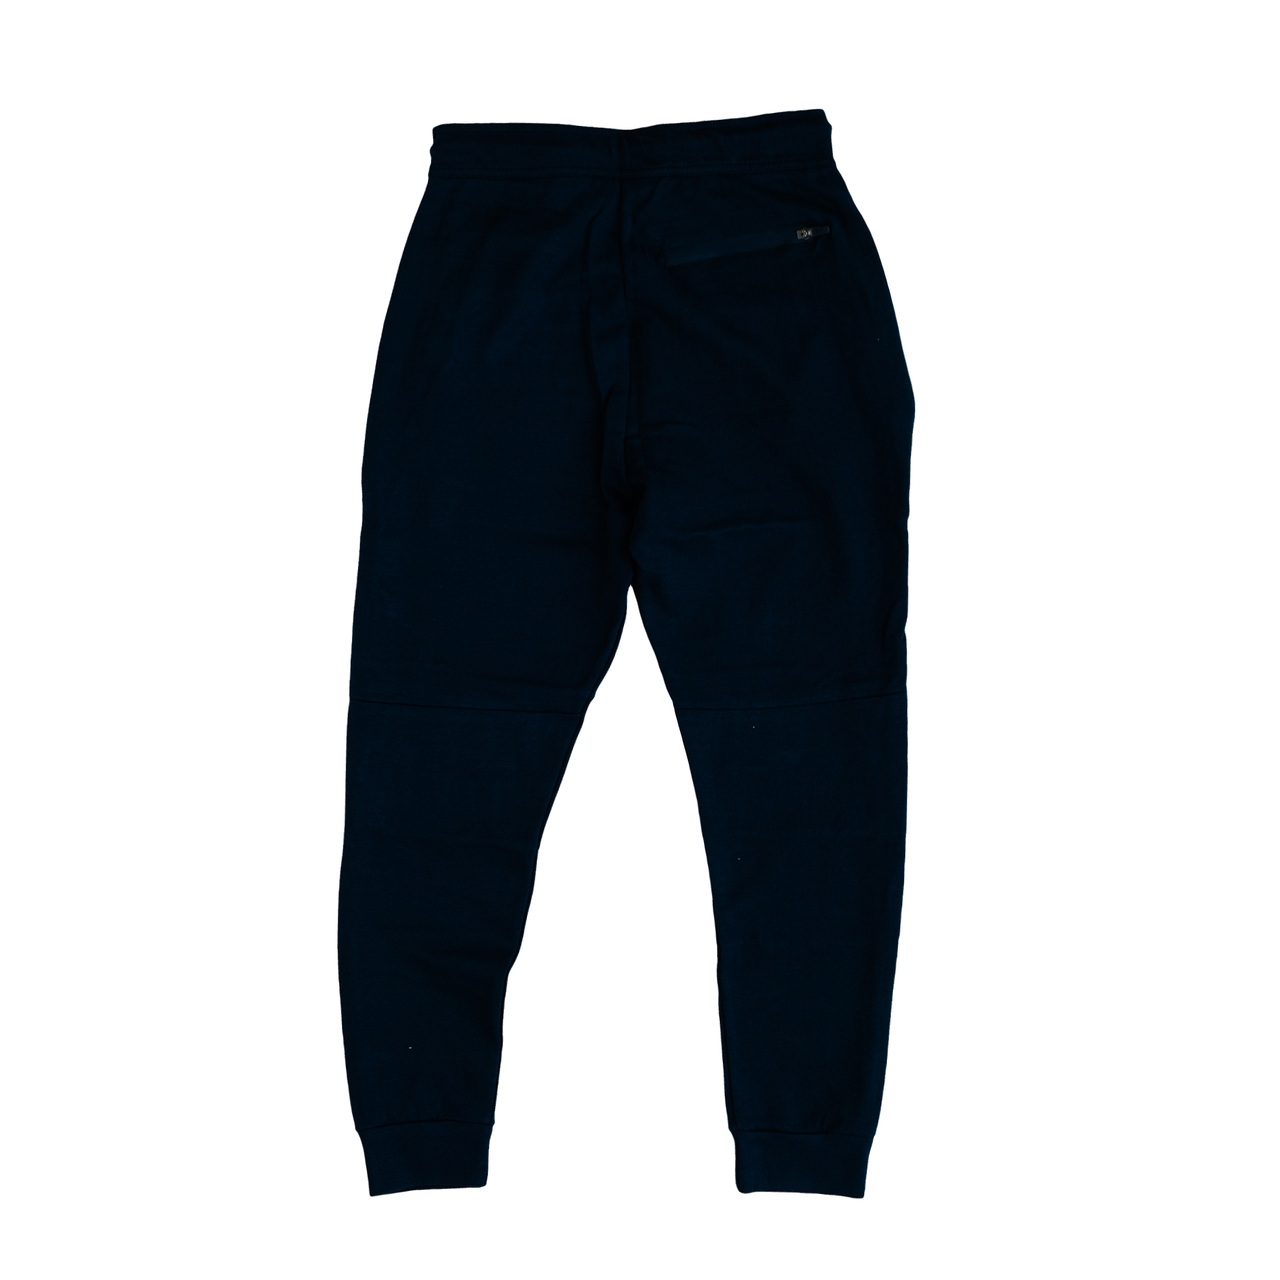 Unisex Active Fleece Jogger Pants 8.25 Oz by Circle Clothing - 2600